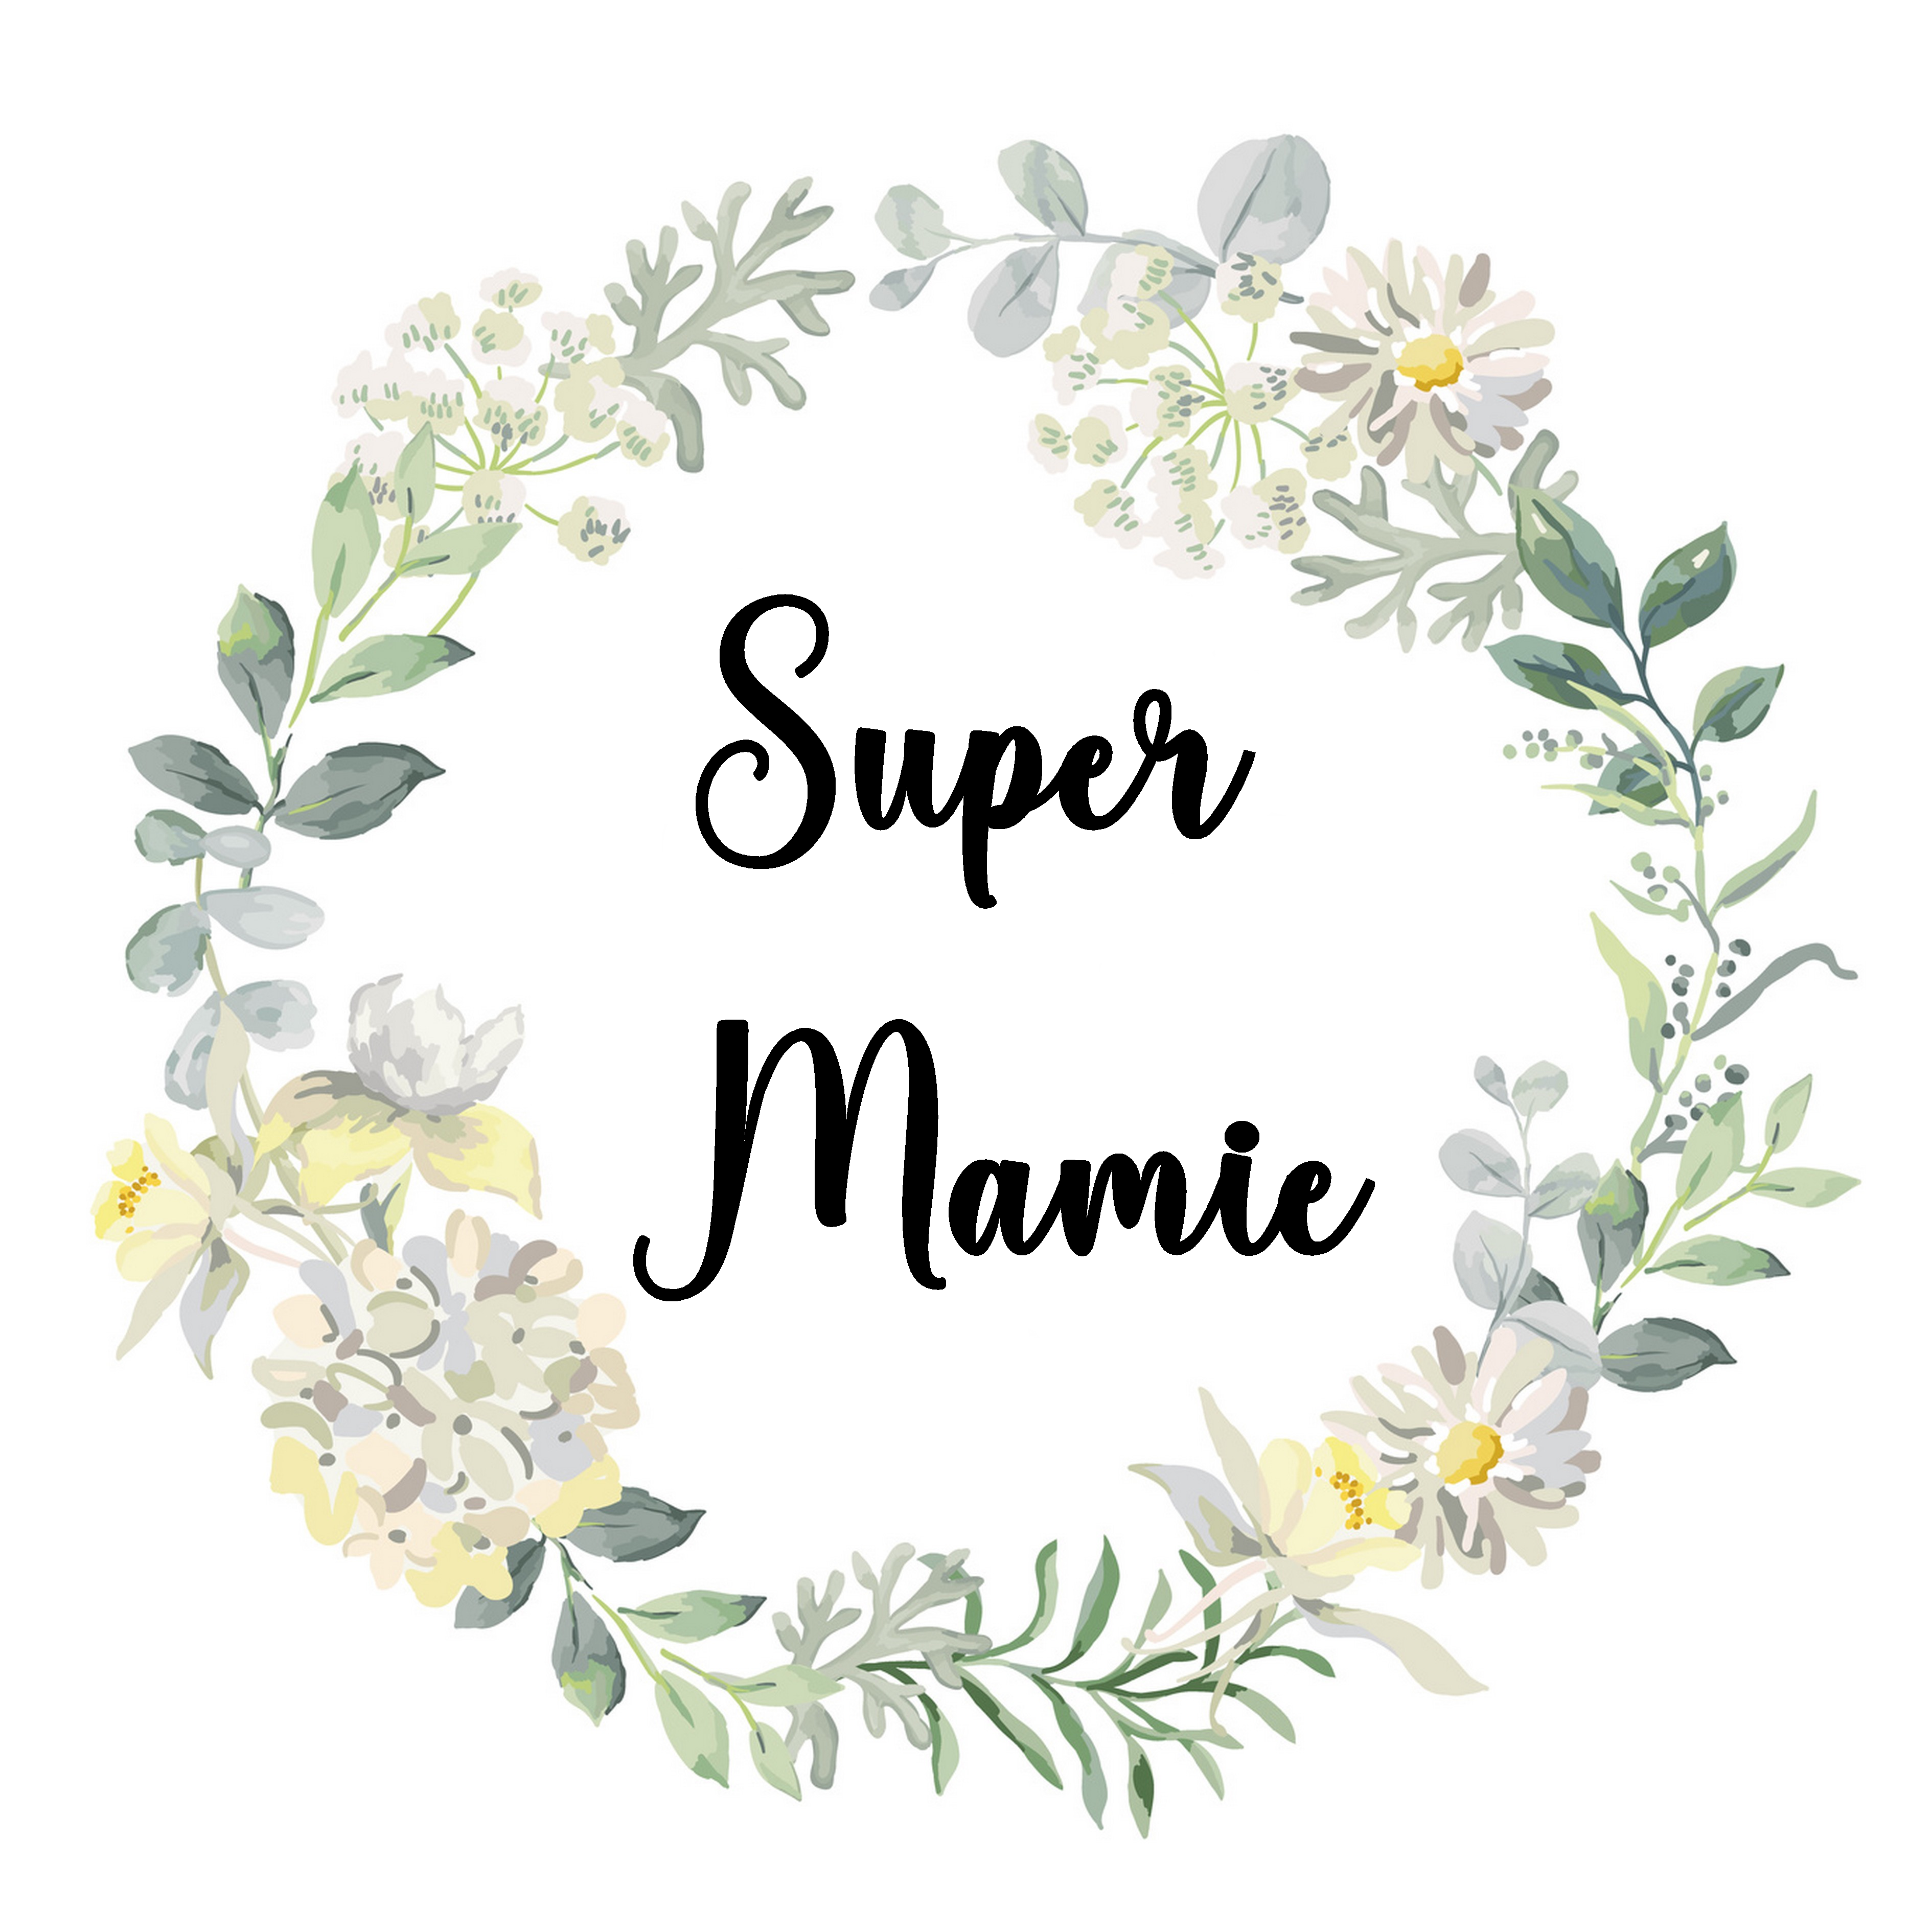 Pochette ronde Super Mamie